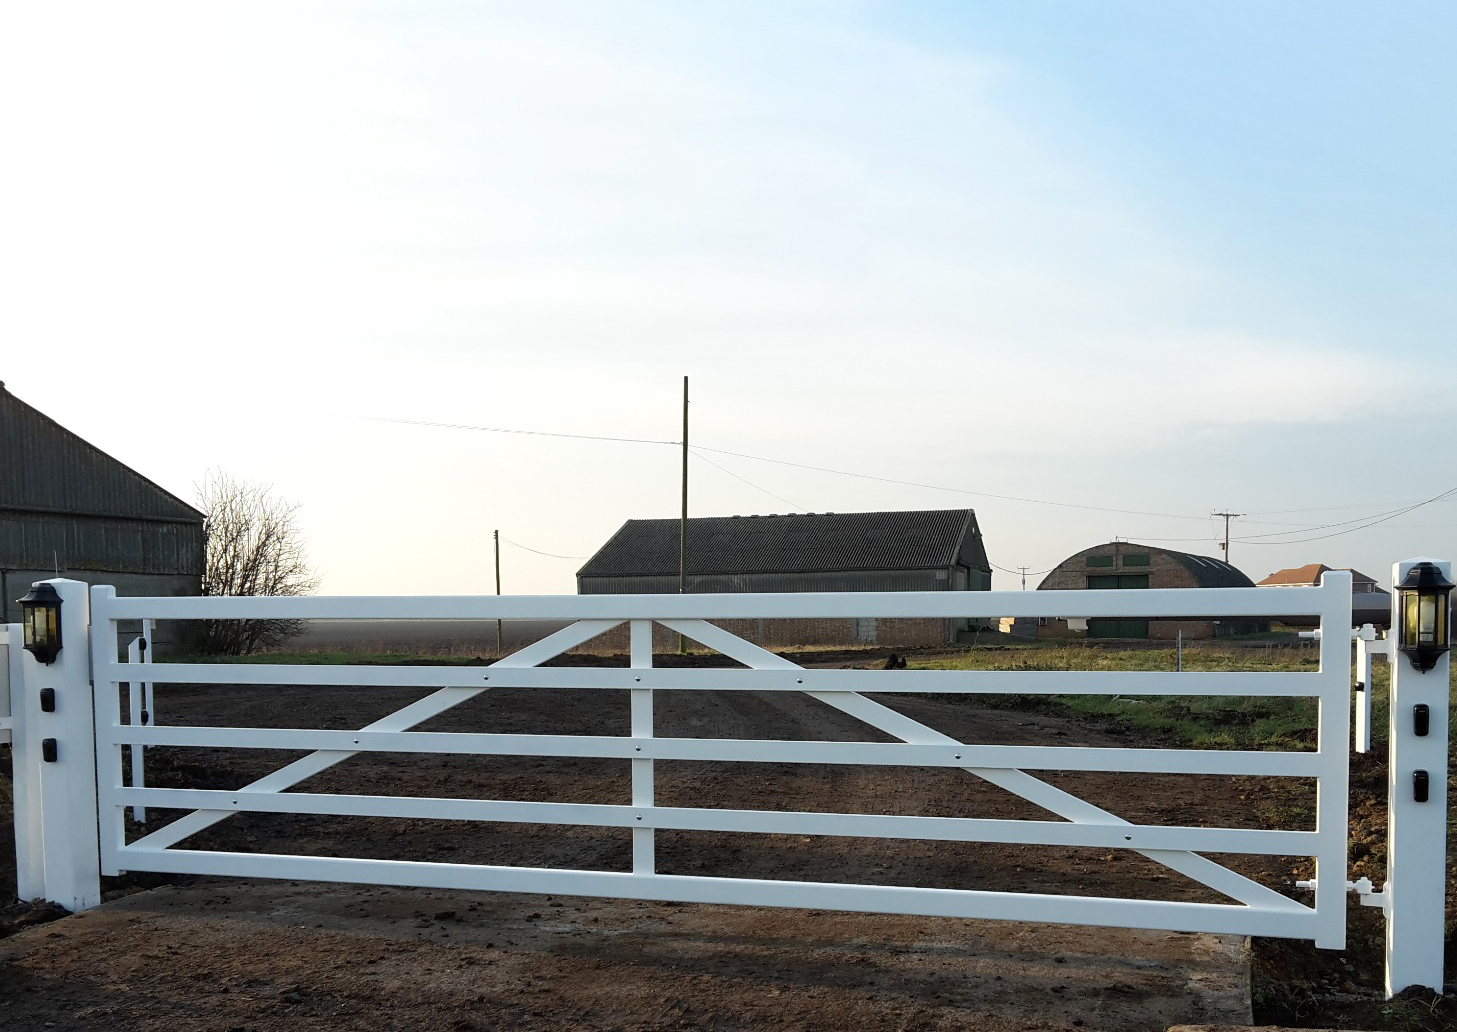 Steel Five Bar Farm Automatic Gate - January 2015 March Cambridgeshire